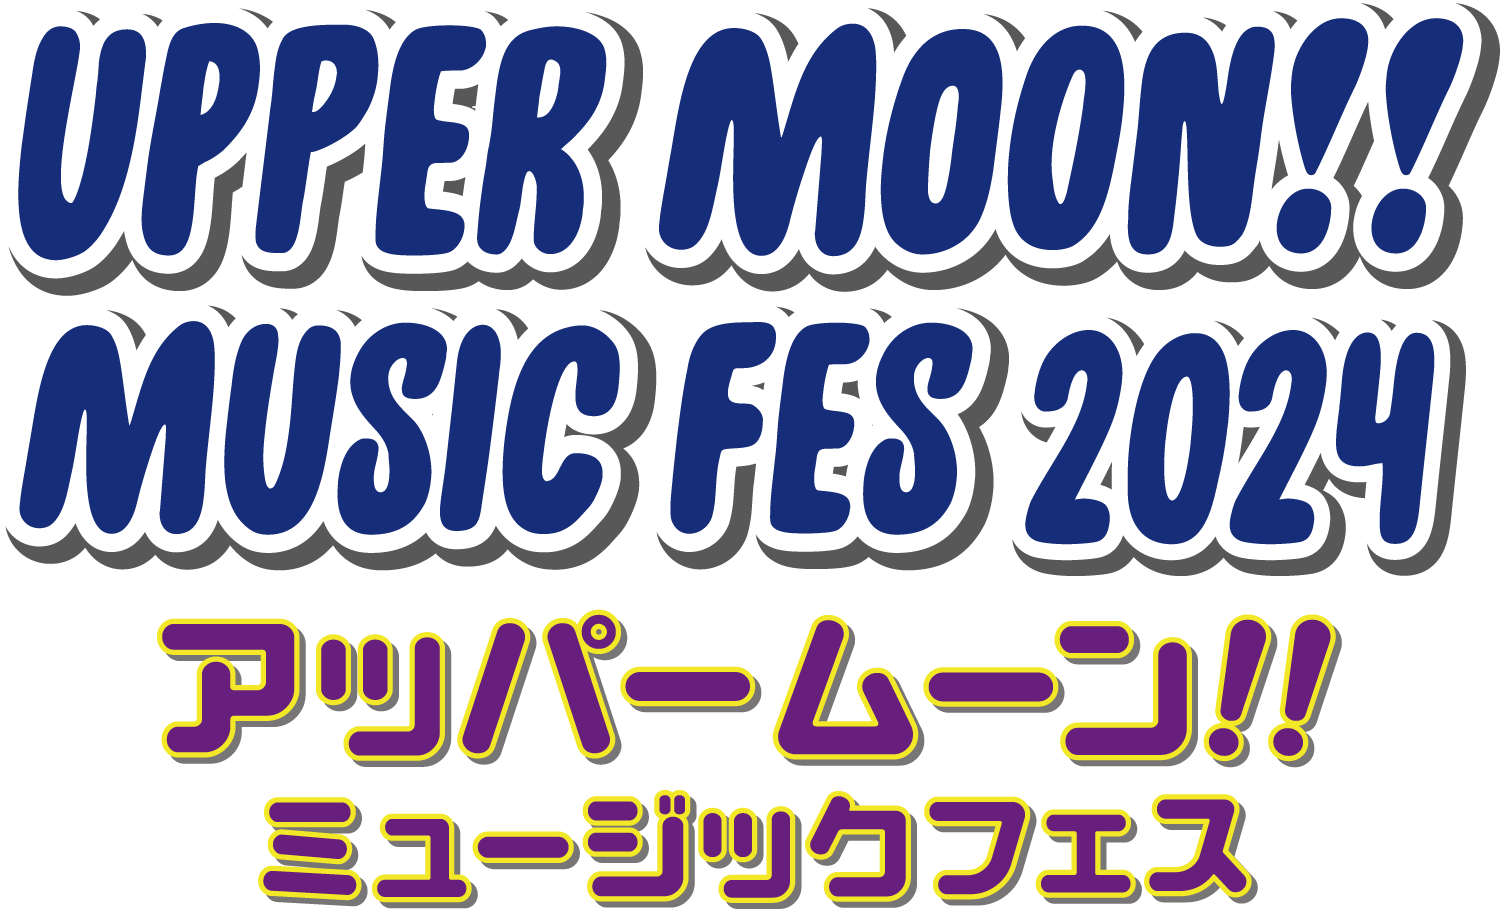 UPPER MOON !! MUSIC FES 2024